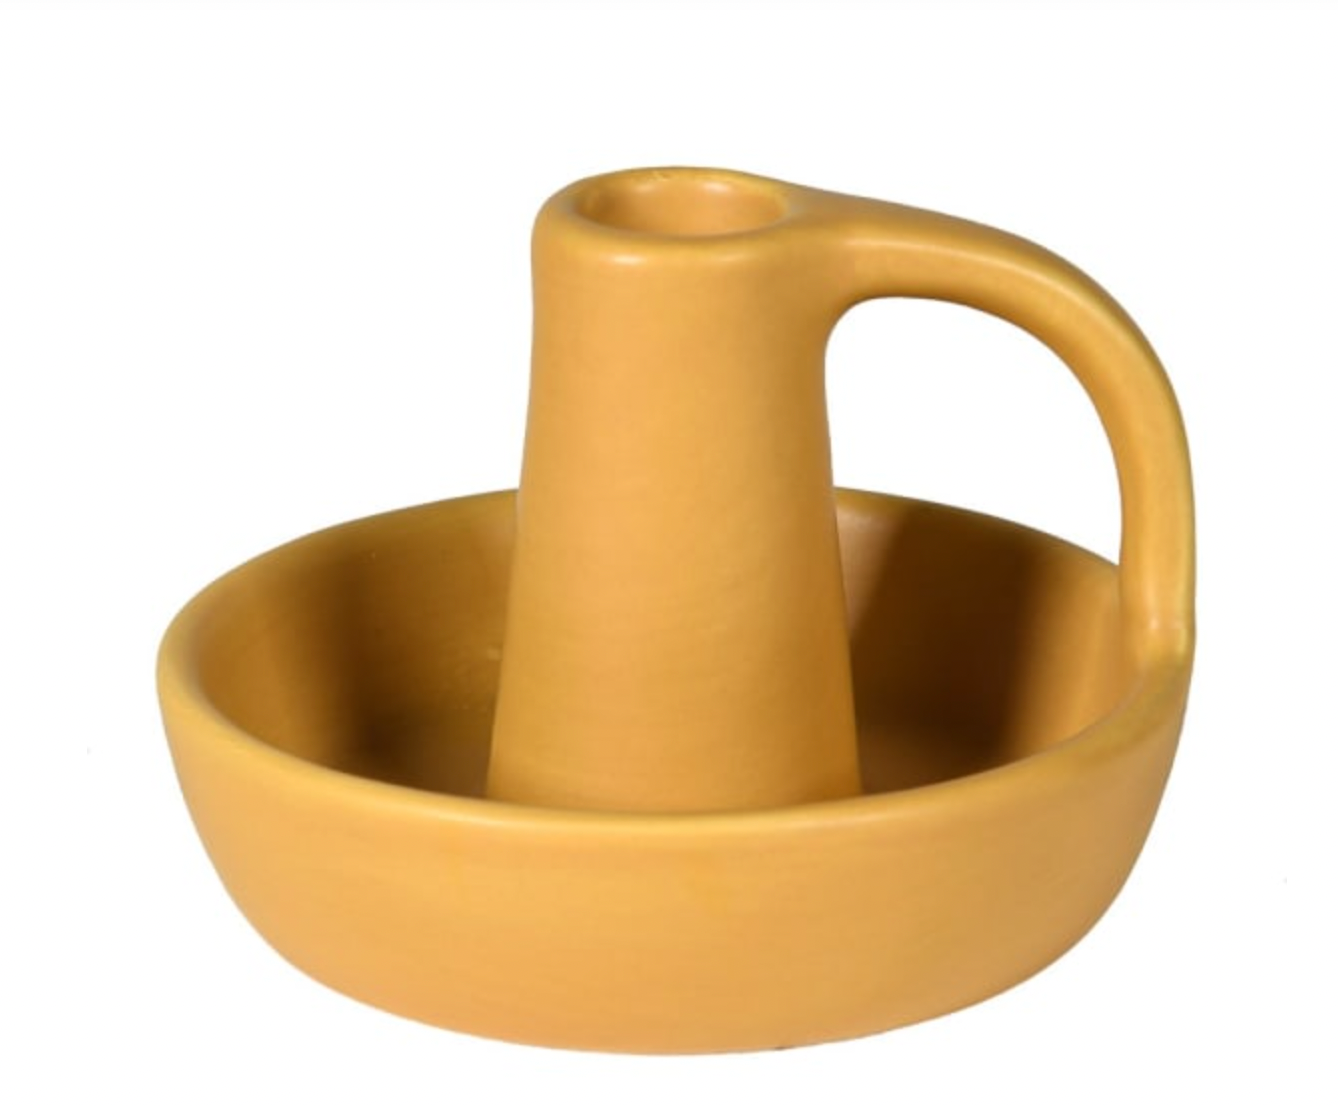 Mustard Ceramic Candle Holder